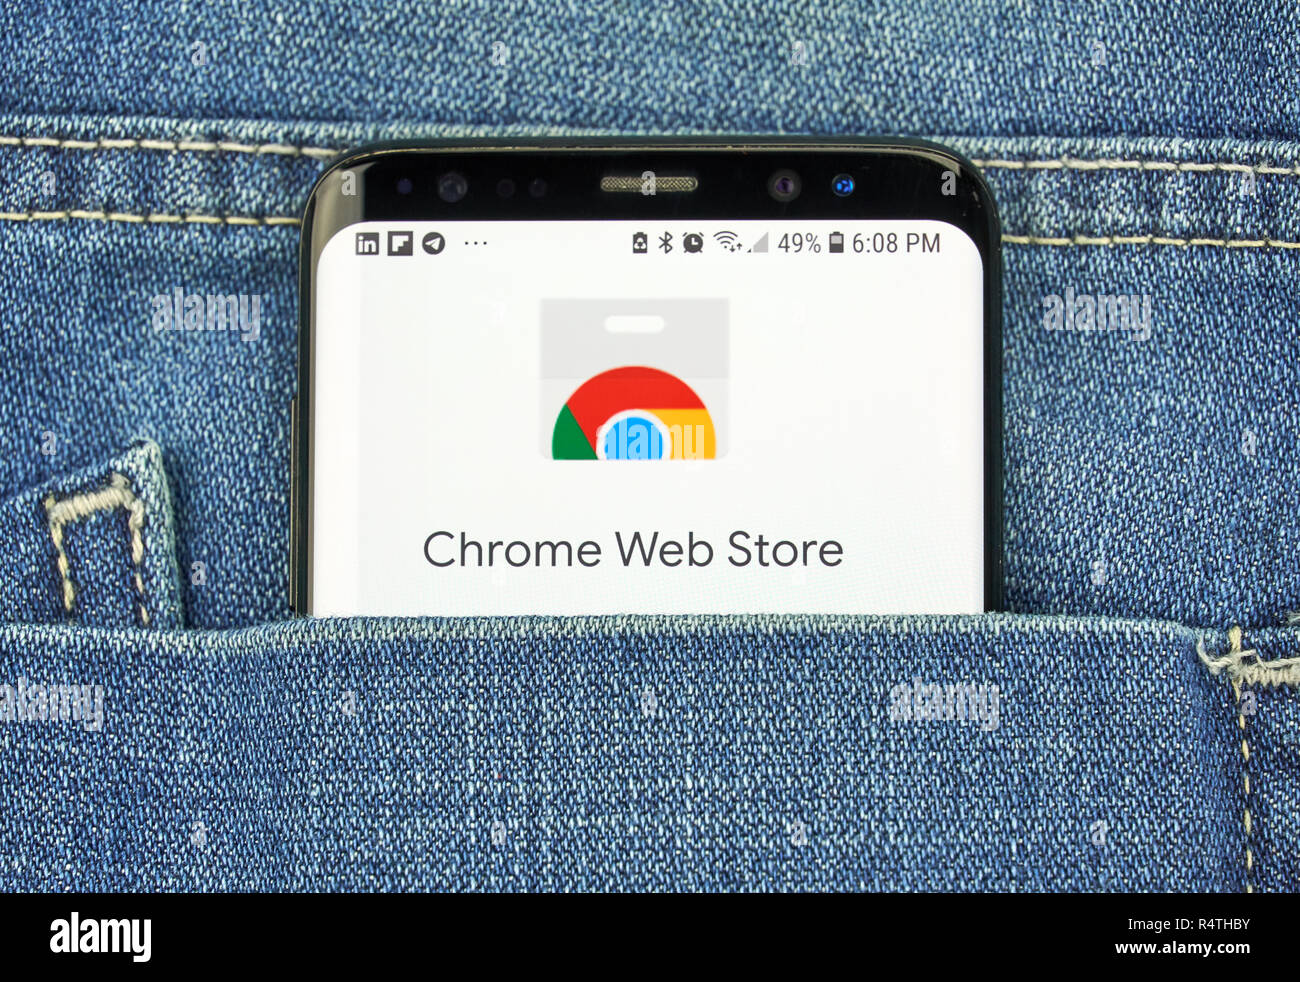 MONTREAL, KANADA - 4. OKTOBER 2018: Google Chrome Web Store Logo auf S8-Bildschirm. Chrome Web Store ist ein Online Store für Web Apps für Google Chrome. Stockfoto